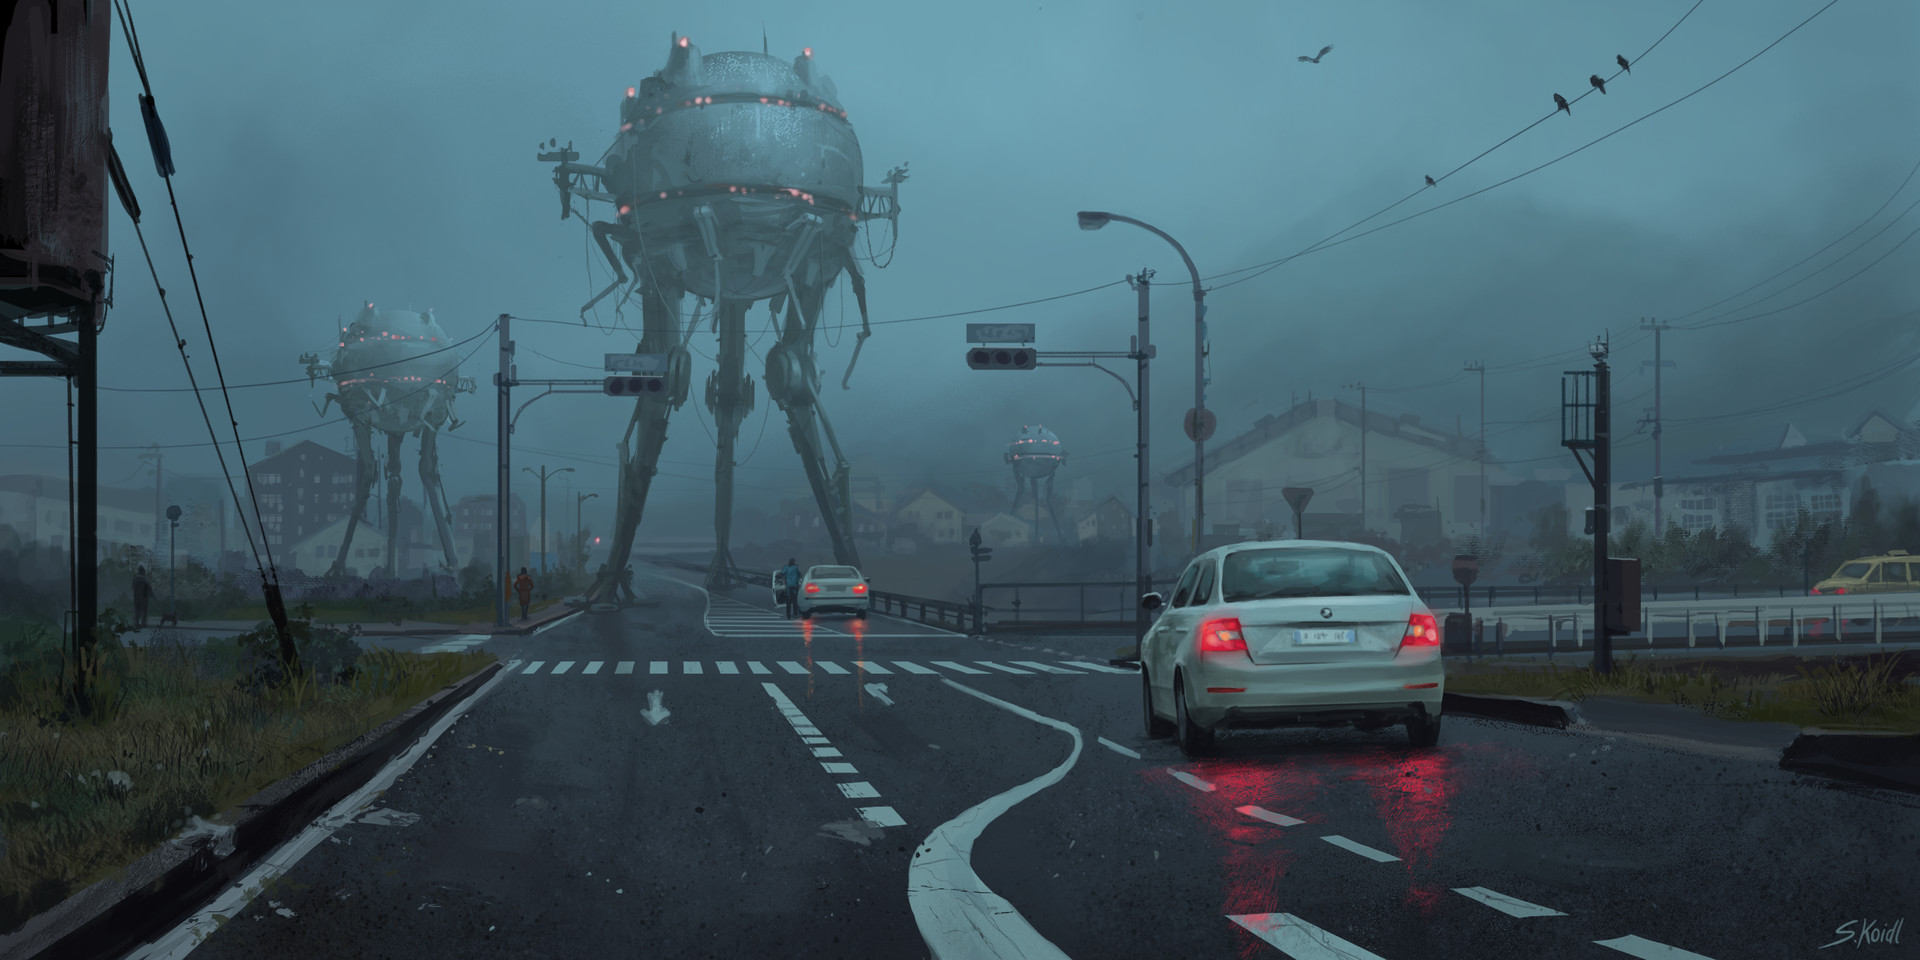 General 1920x960 artwork robot city car apocalyptic science fiction tripod illustration Stefan Koidl